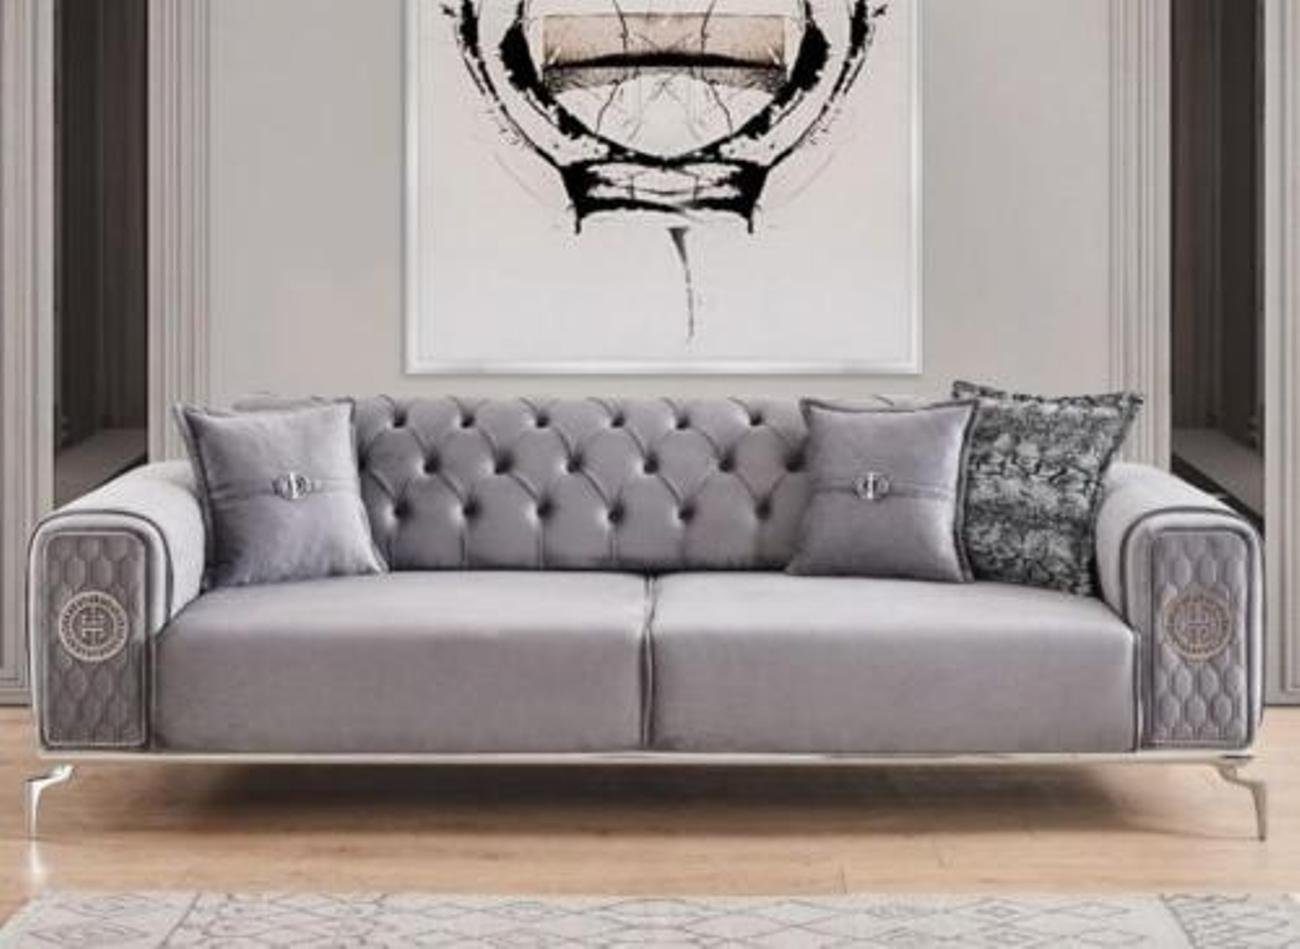 JVmoebel 3-Sitzer Dreisitzer Stoffsofa Chesterfield Couch Sofa Grau Stoff Polyester, 1 Teile, Made in Europa